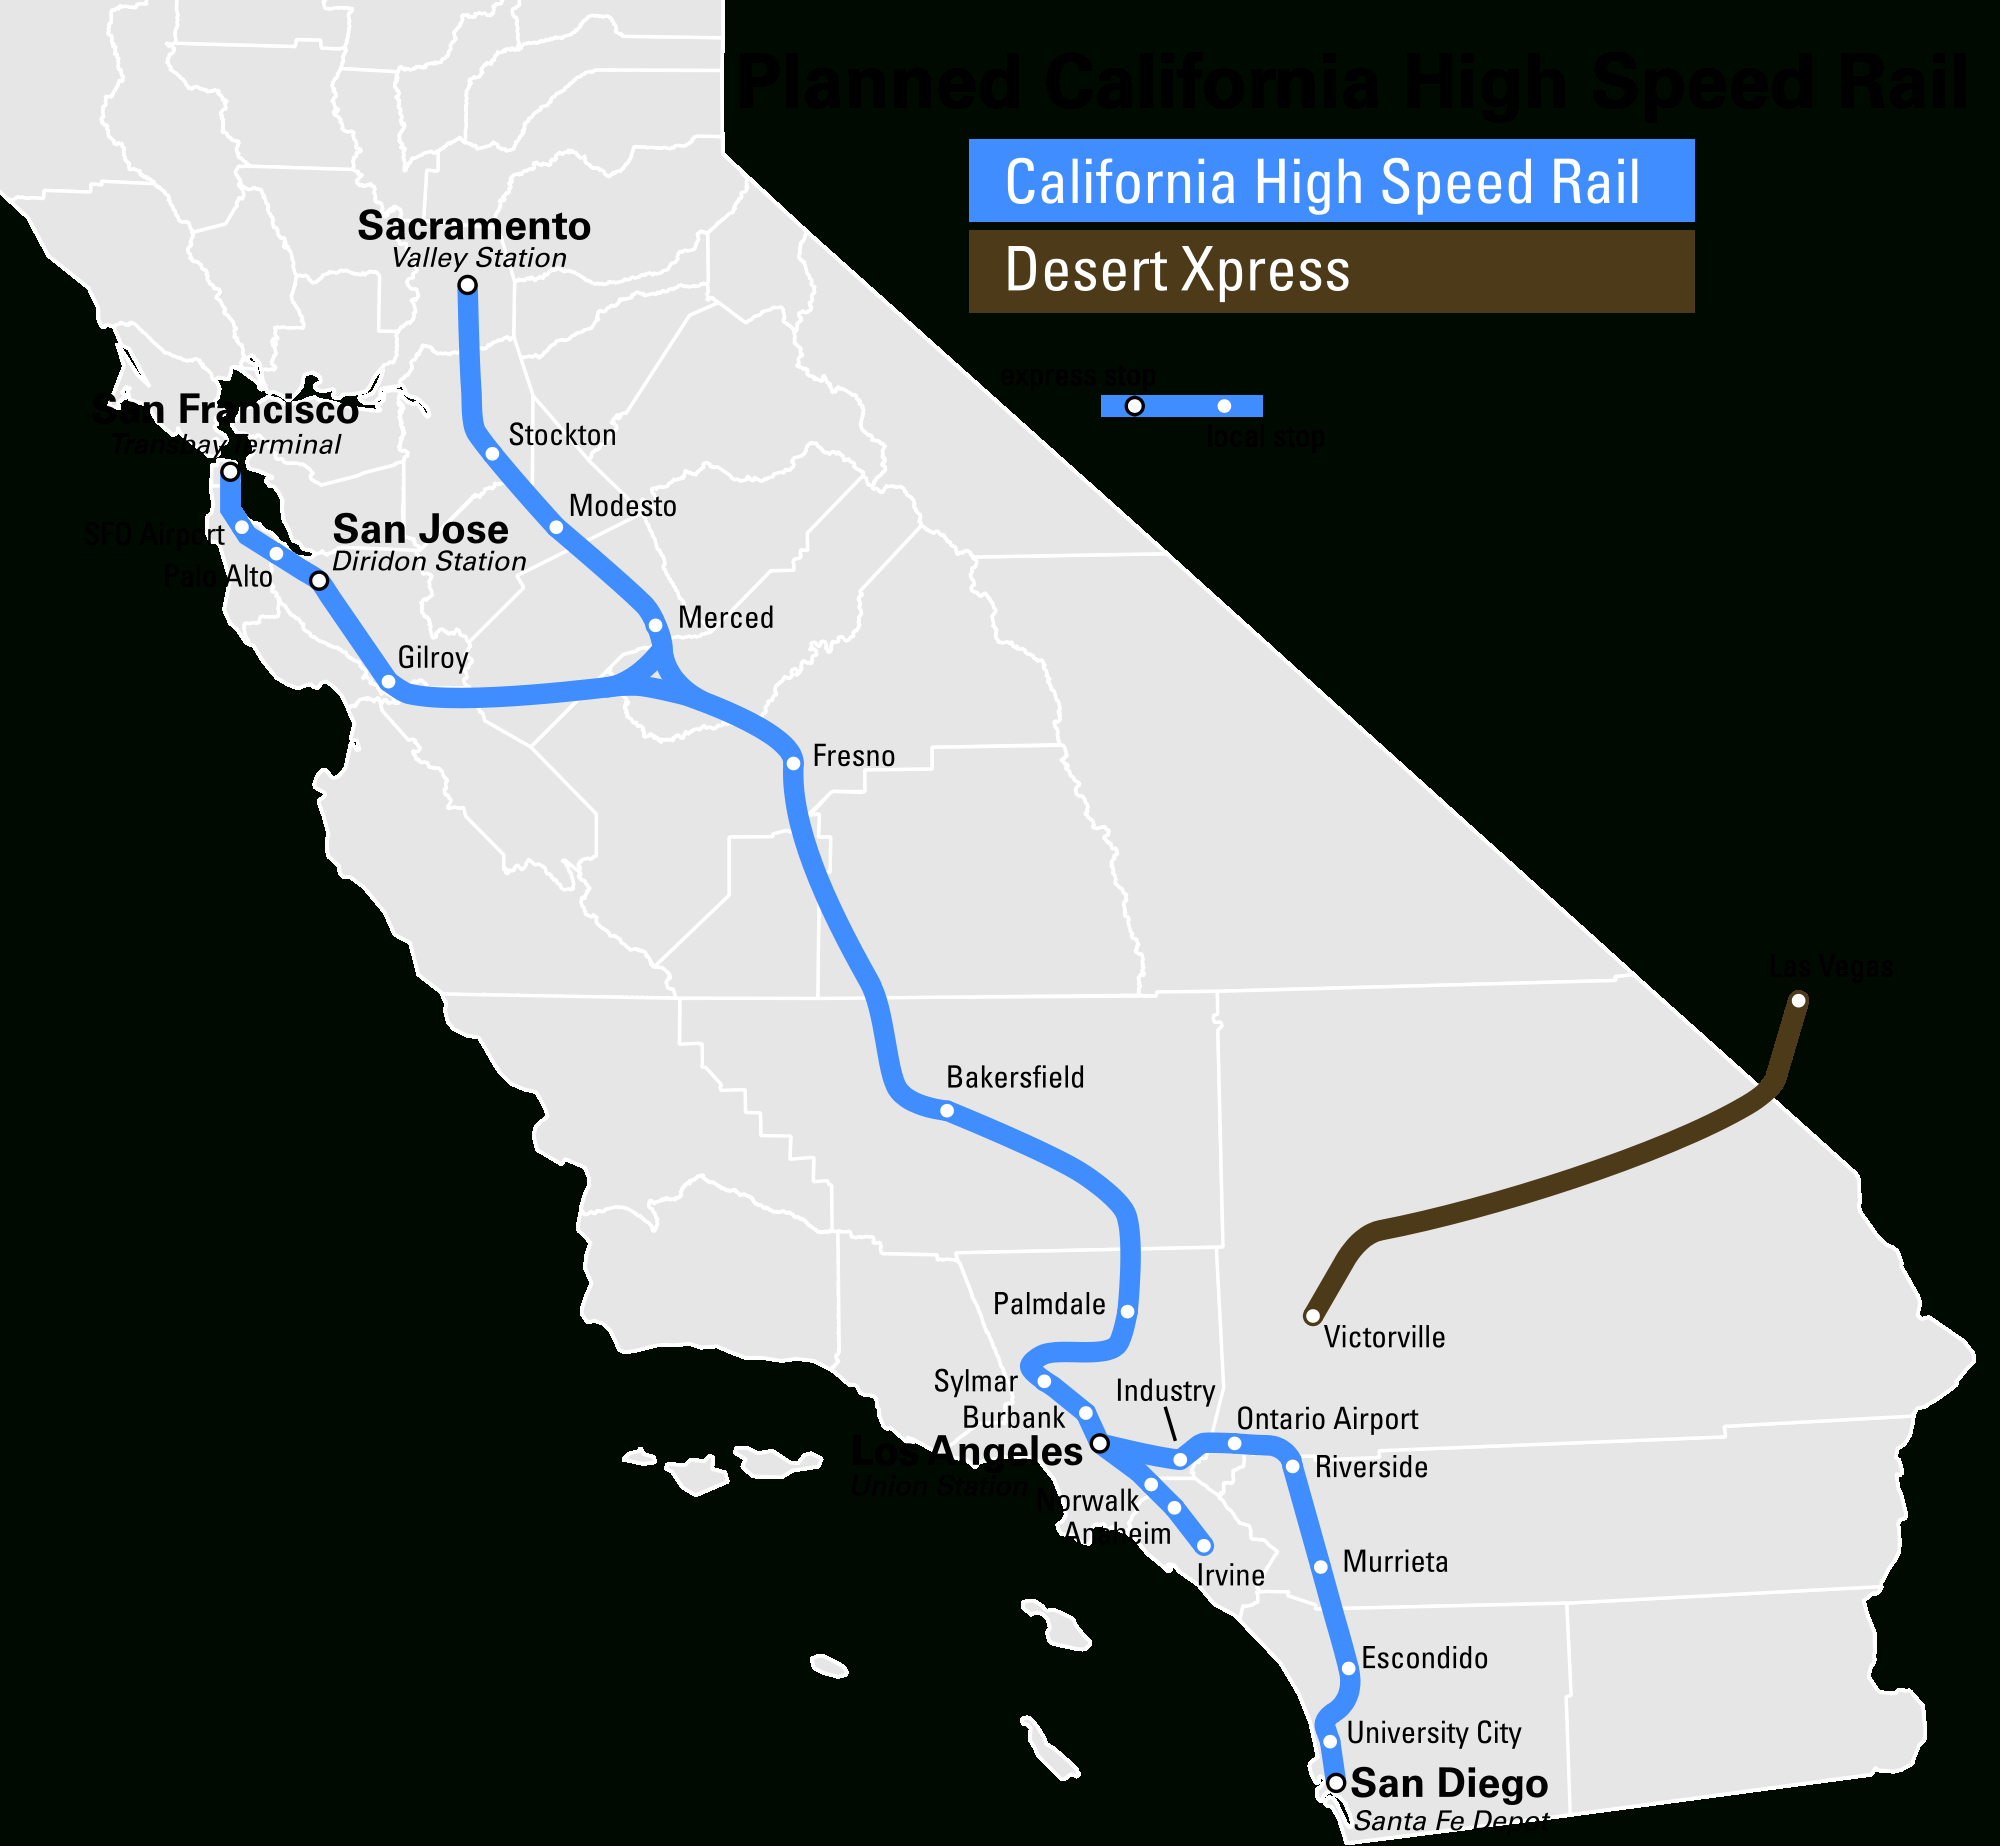 High Speed Rail To Las Vegas Breaks Ground 2017 - Canyon News - California High Speed Rail Progress Map